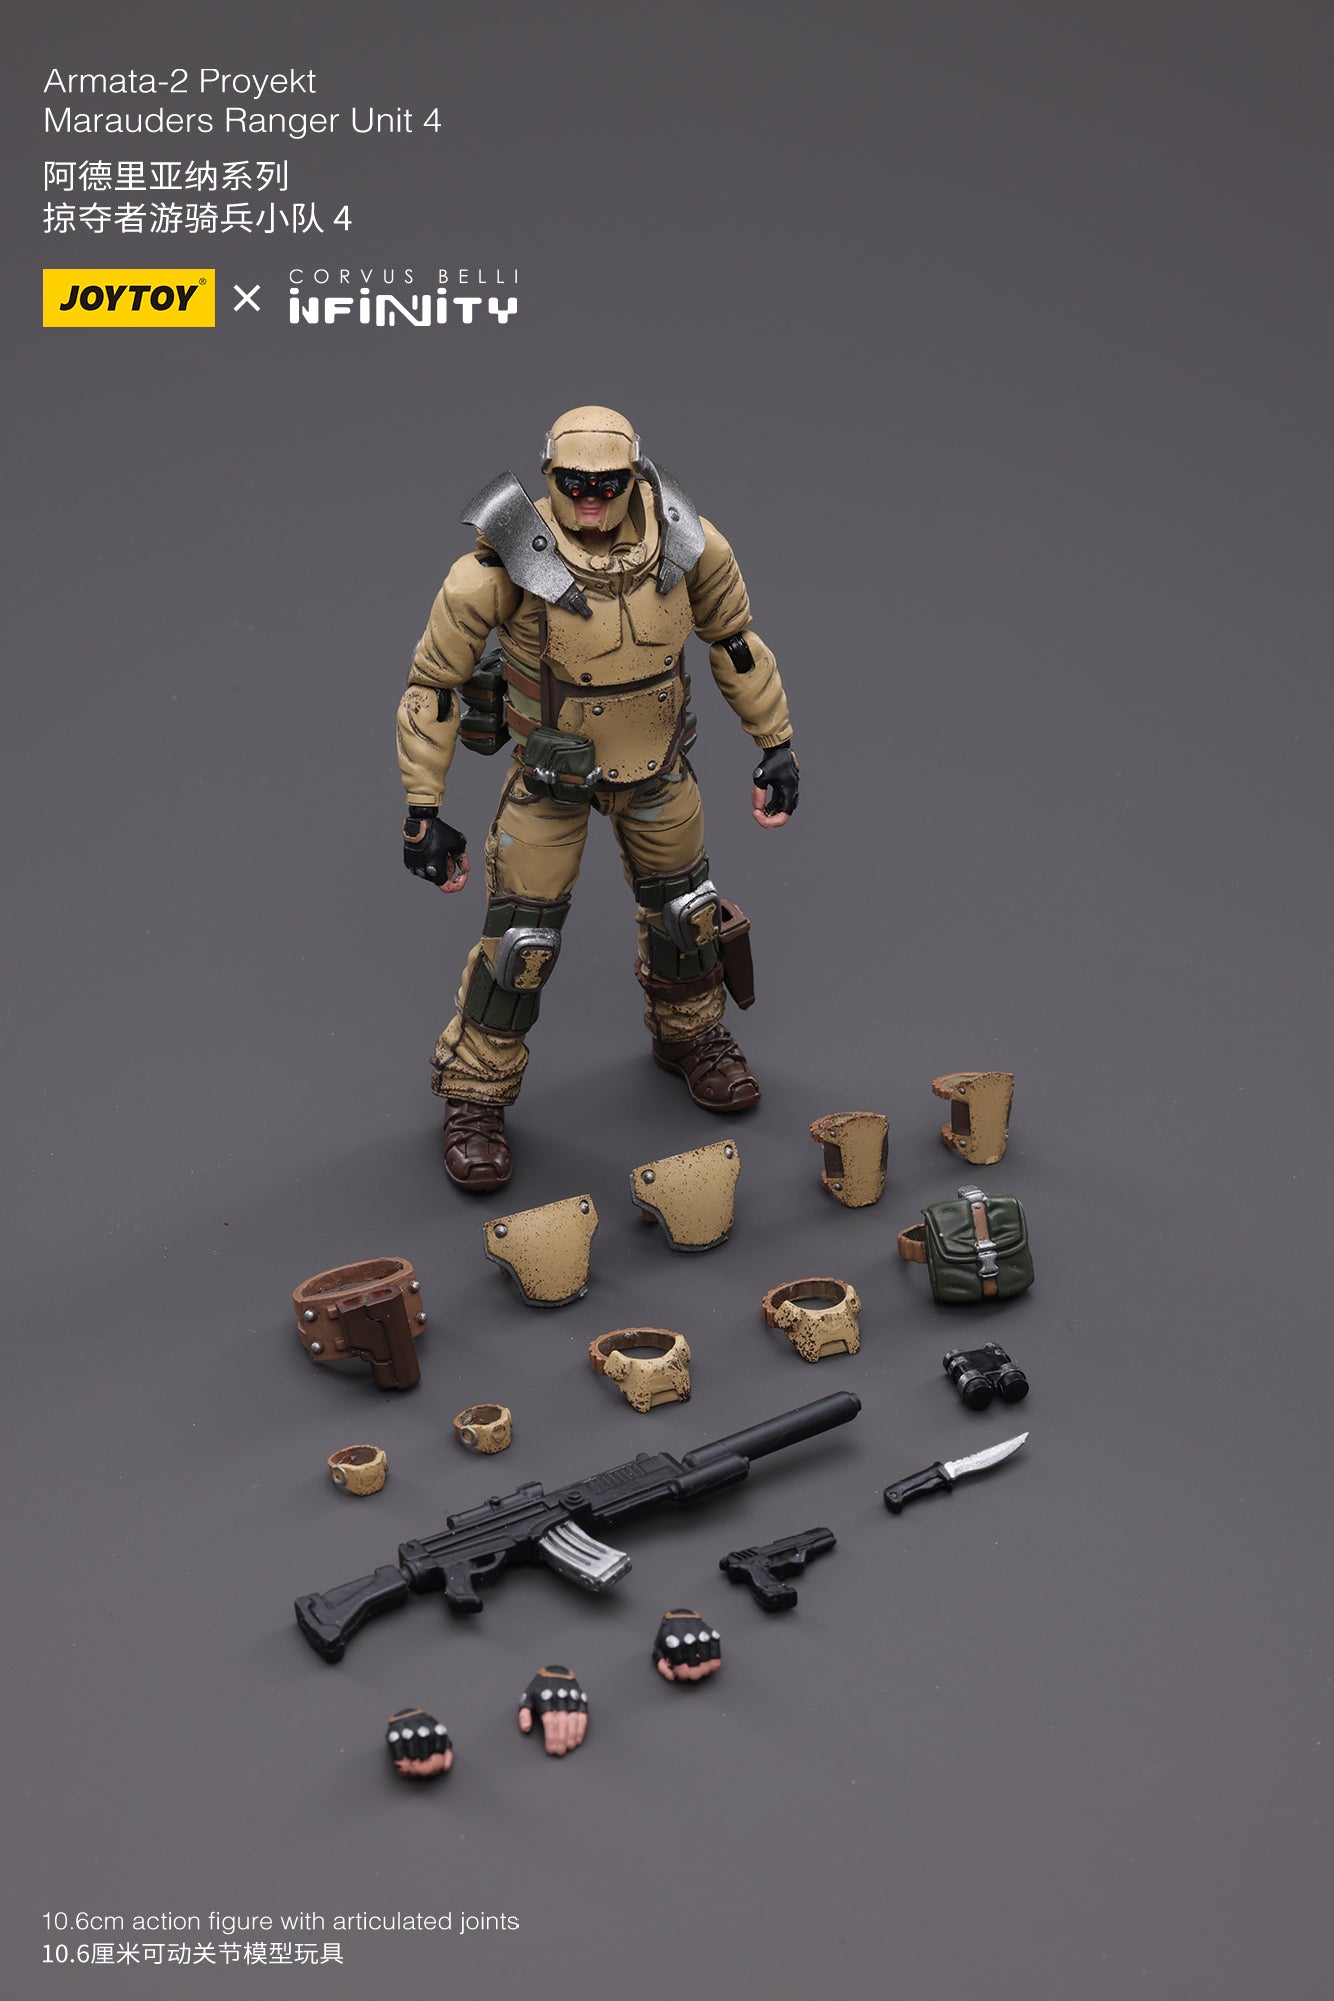 Armata-2 Proyekt Marauders Ranger Unit 4- Action Figure By JOYTOY